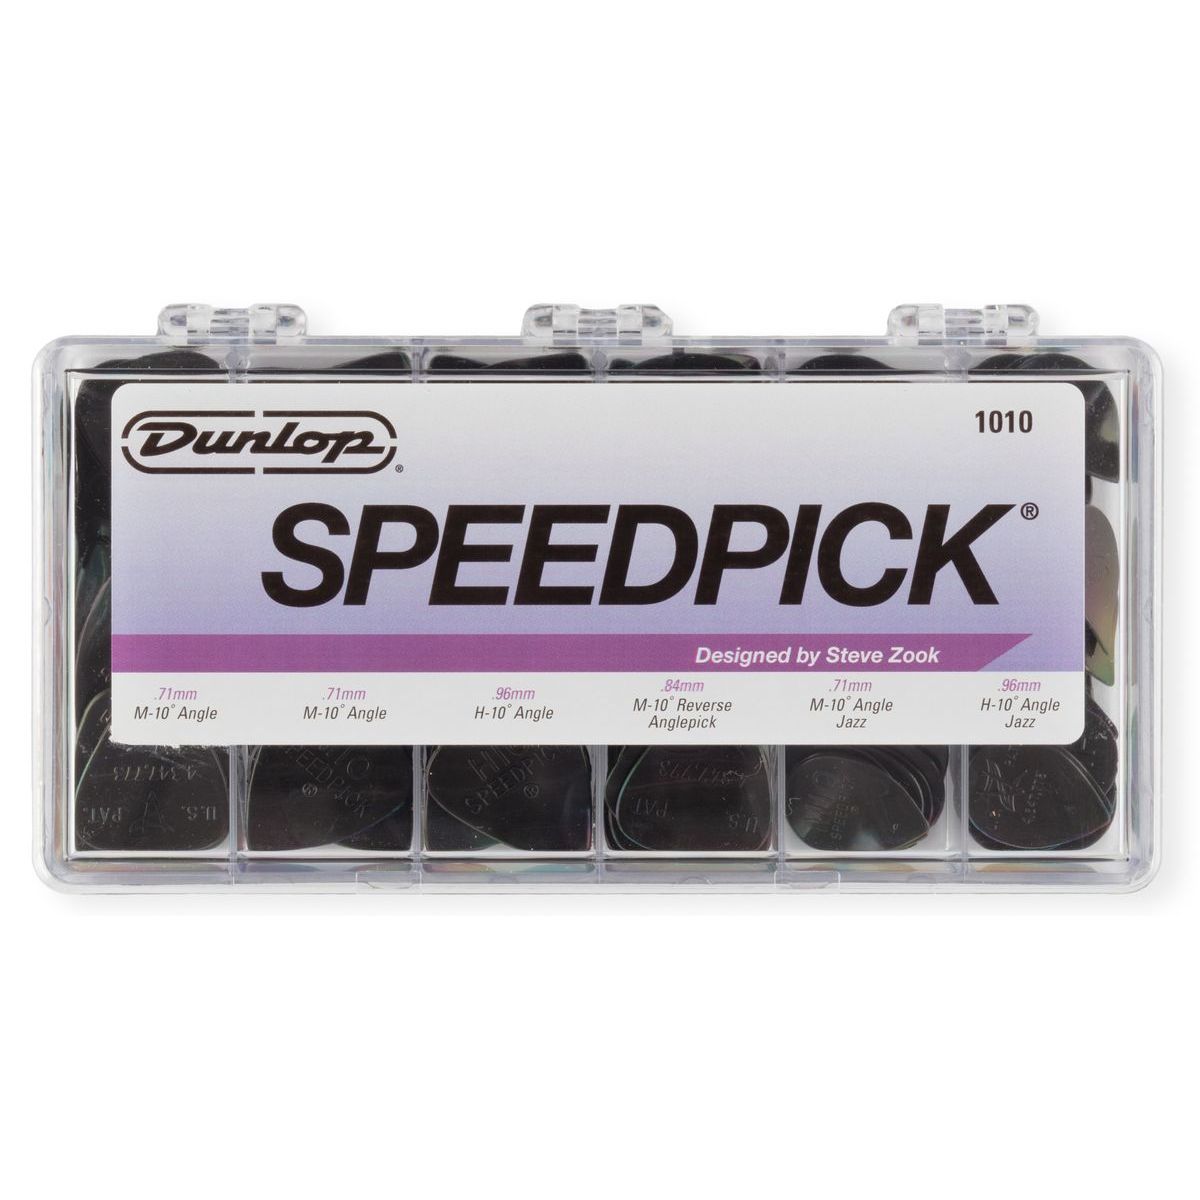 Медиаторы Dunlop 1010 Speedpick Display (144 шт) медиаторы dunlop 421r114 ultex standard 72 шт